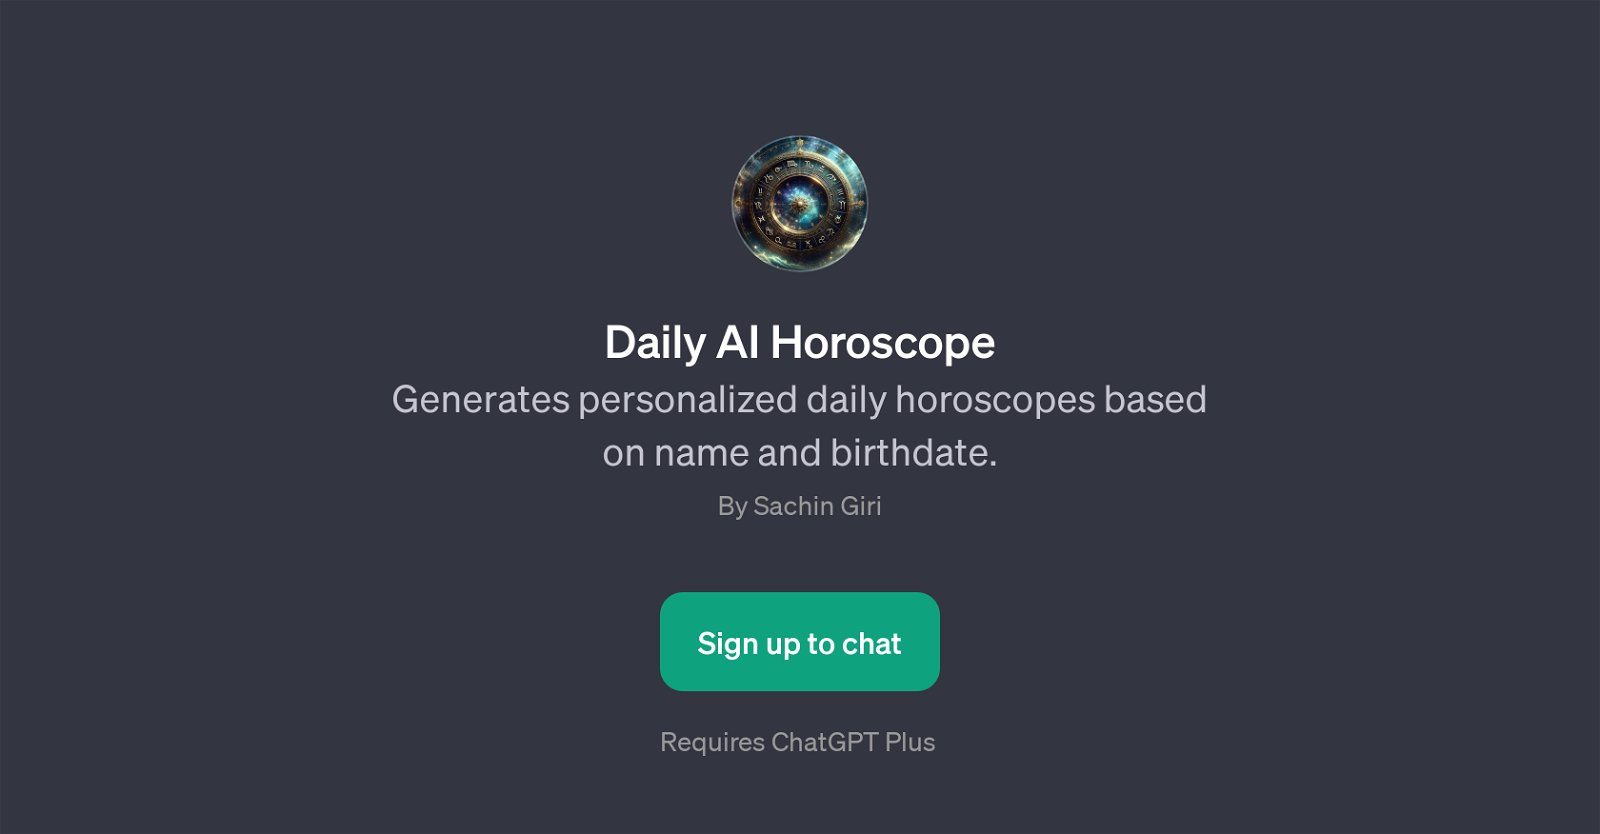 Daily AI Horoscope website